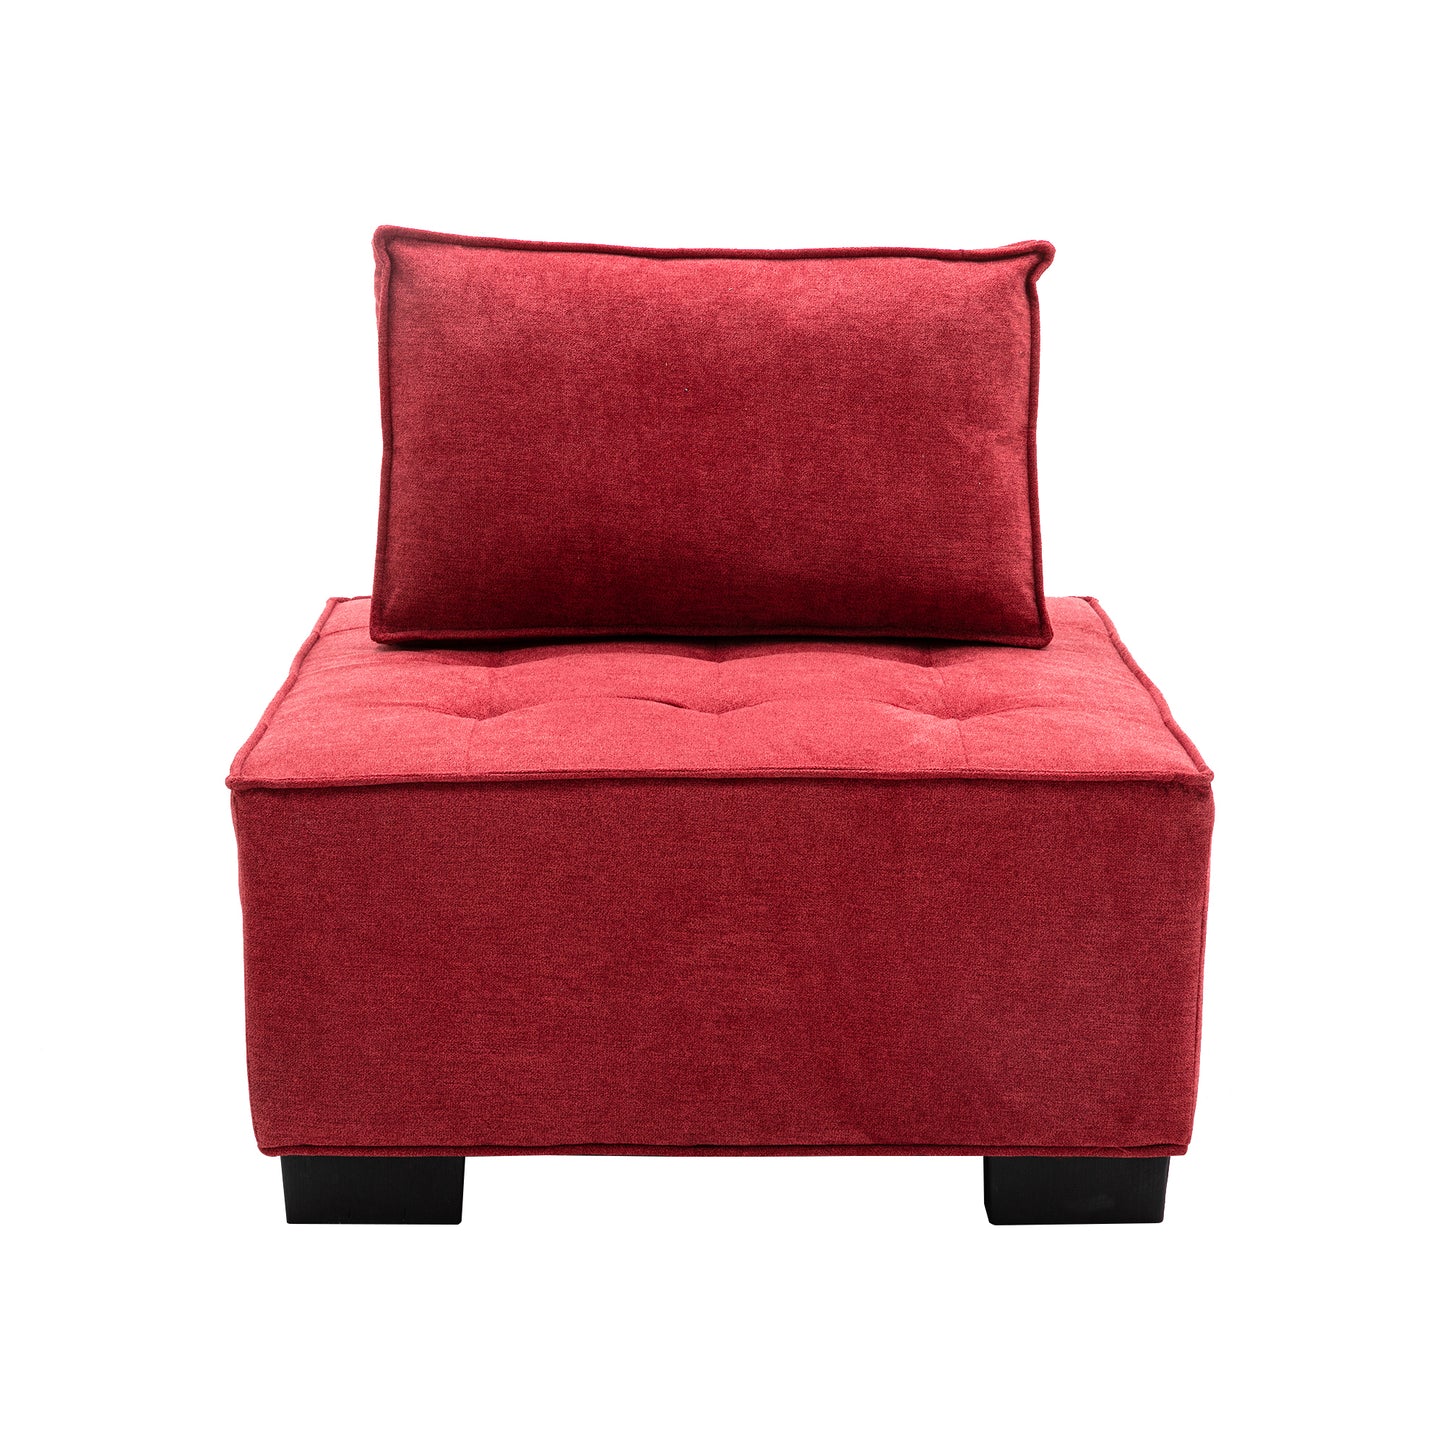 Living Room Ottoman, Lazy Chair